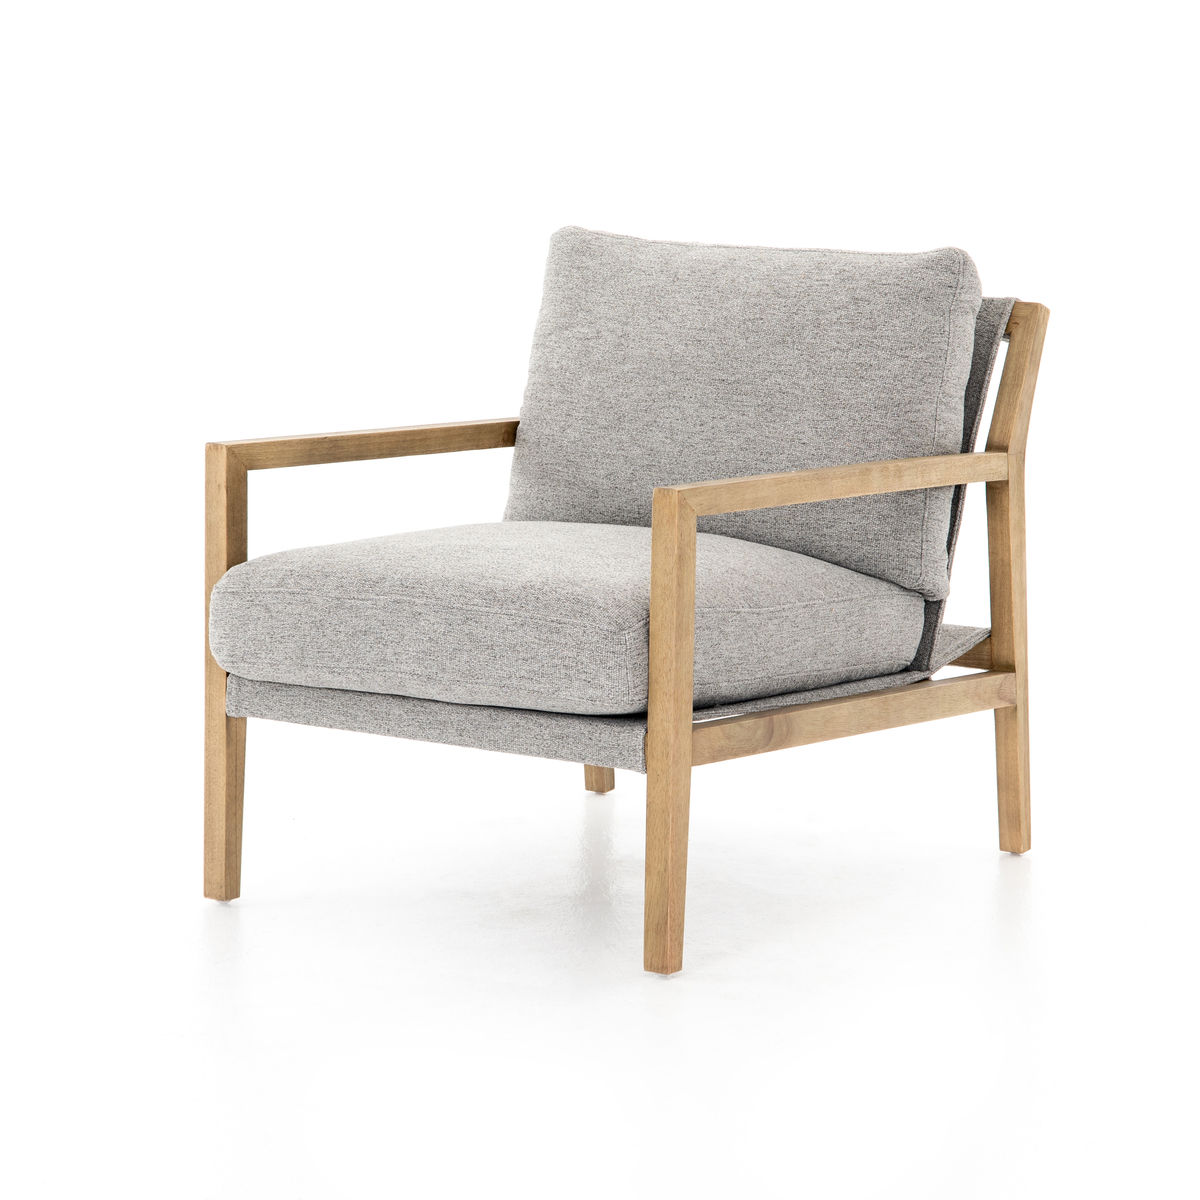 Brantley Chair-Zion Ash/Natural